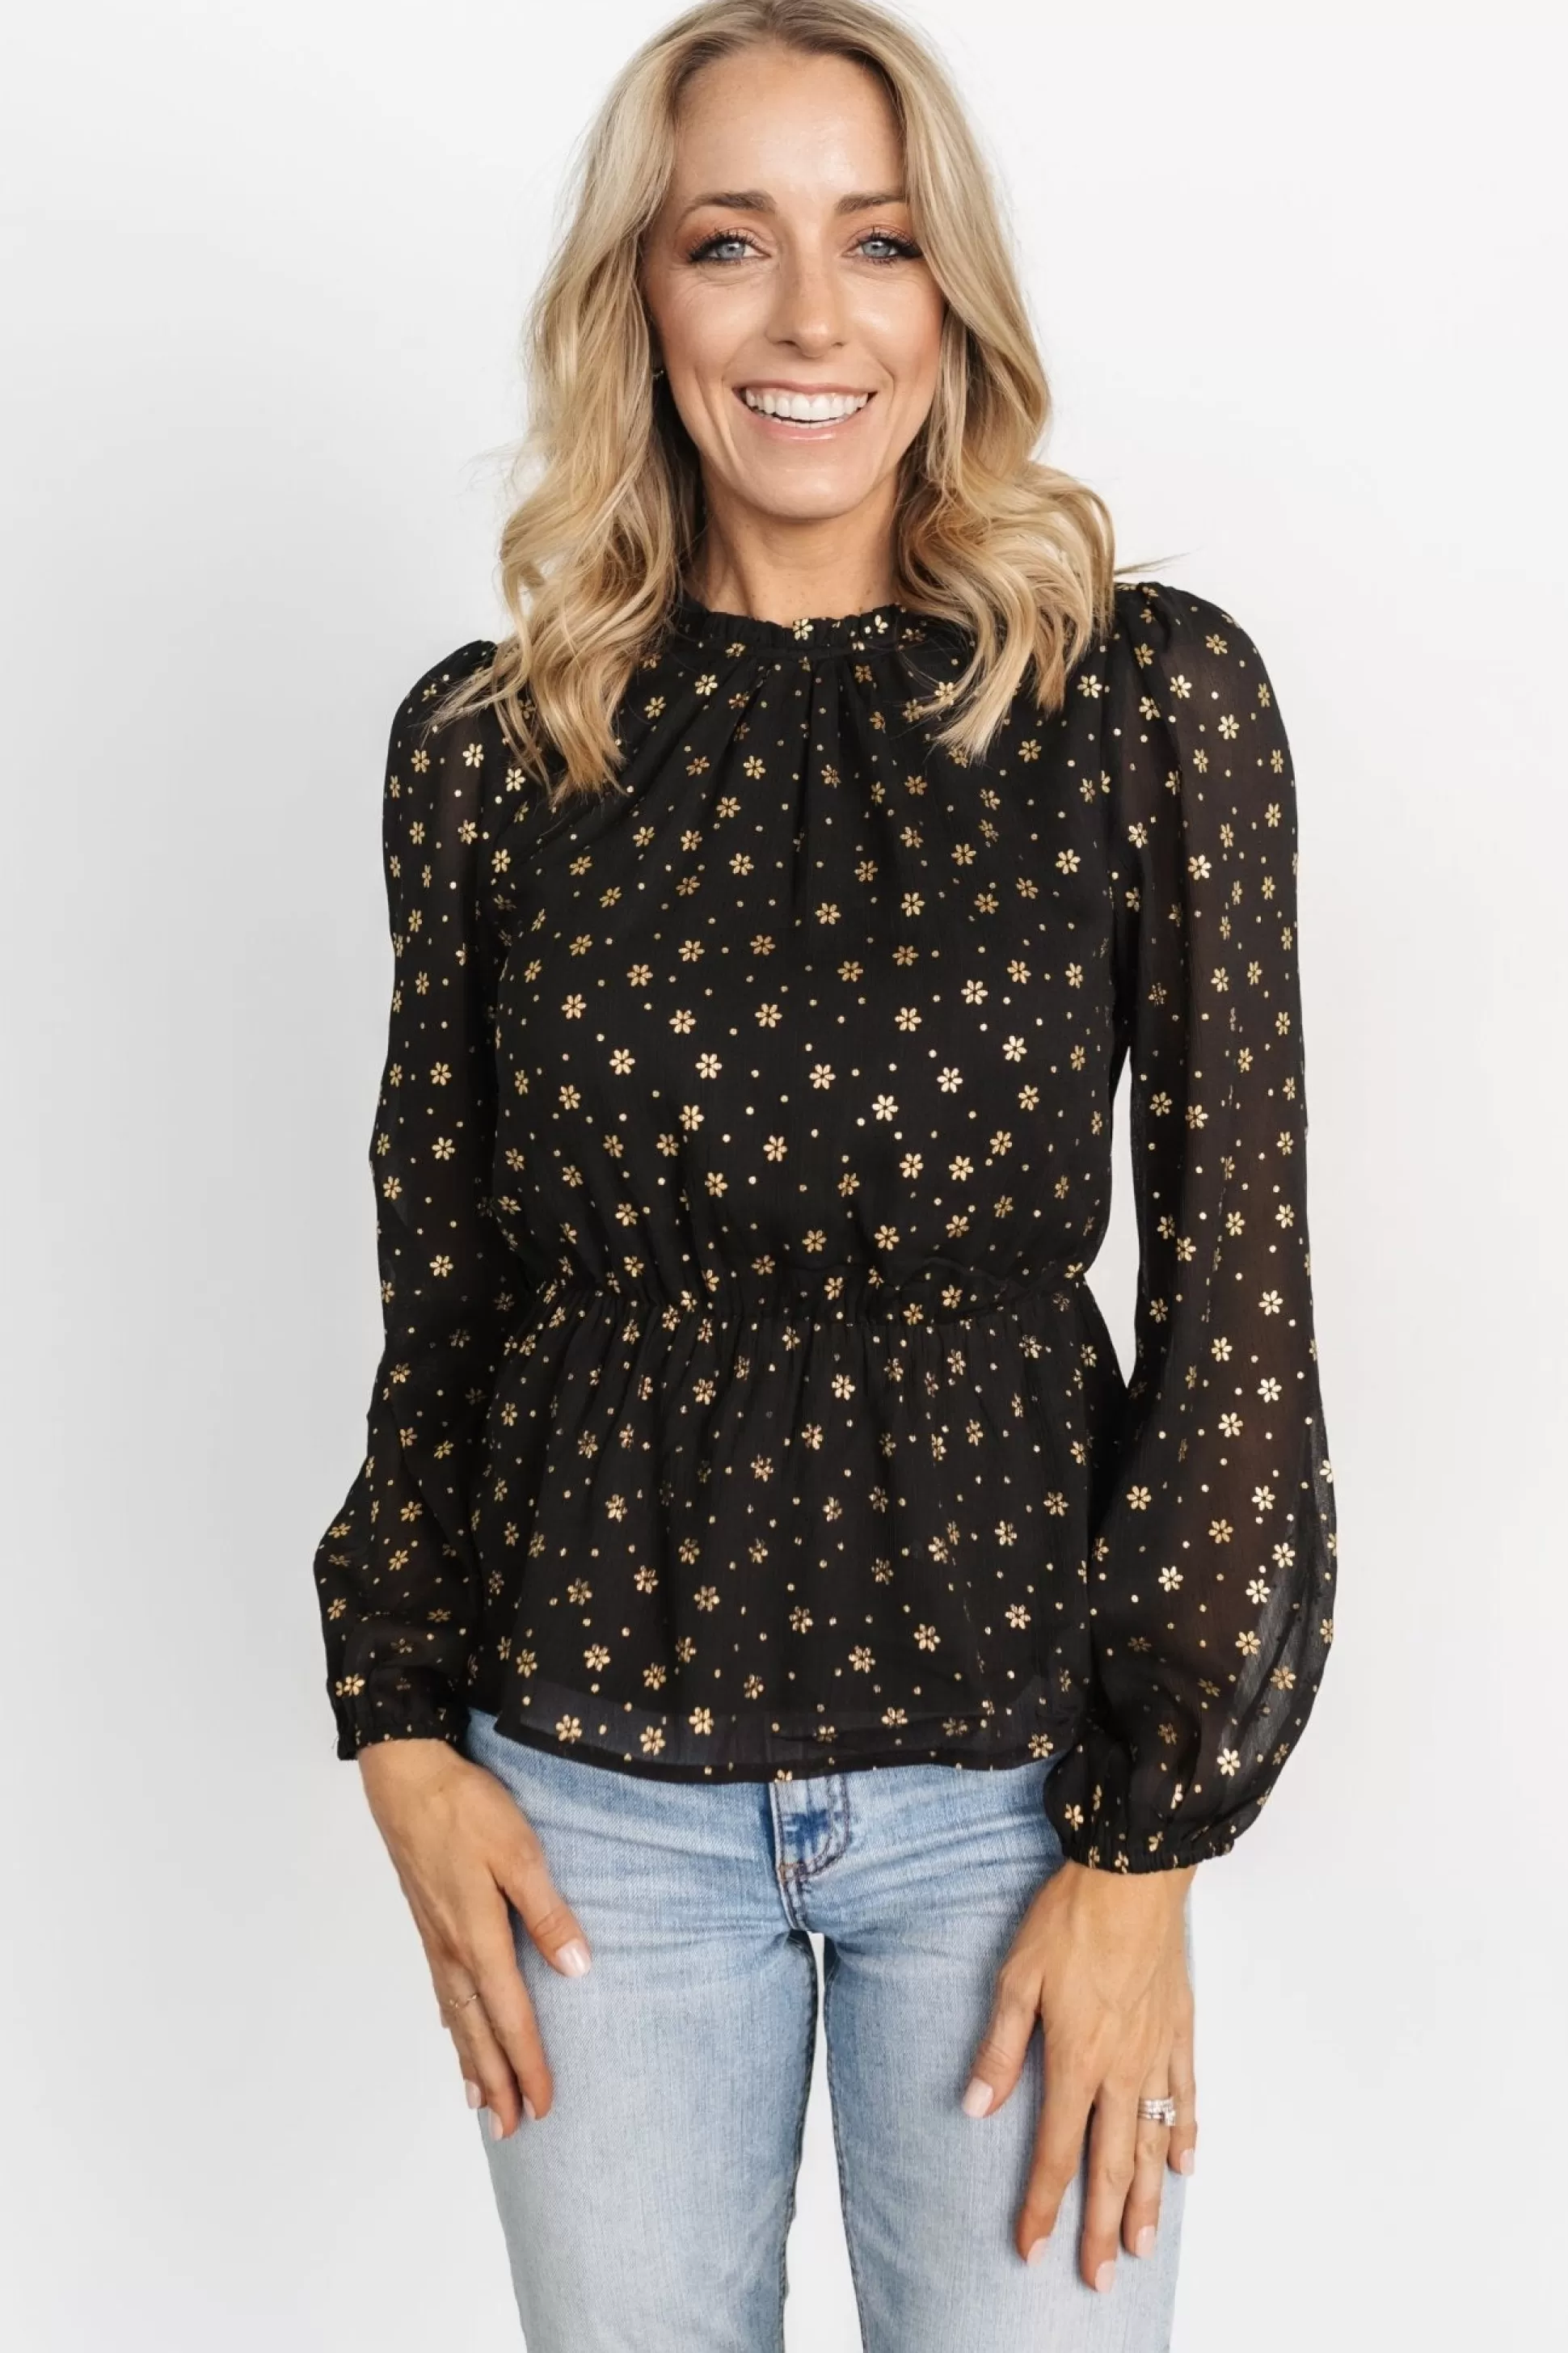 blouses + shirts | Baltic Born Chandra Peplum Top | Black + Gold